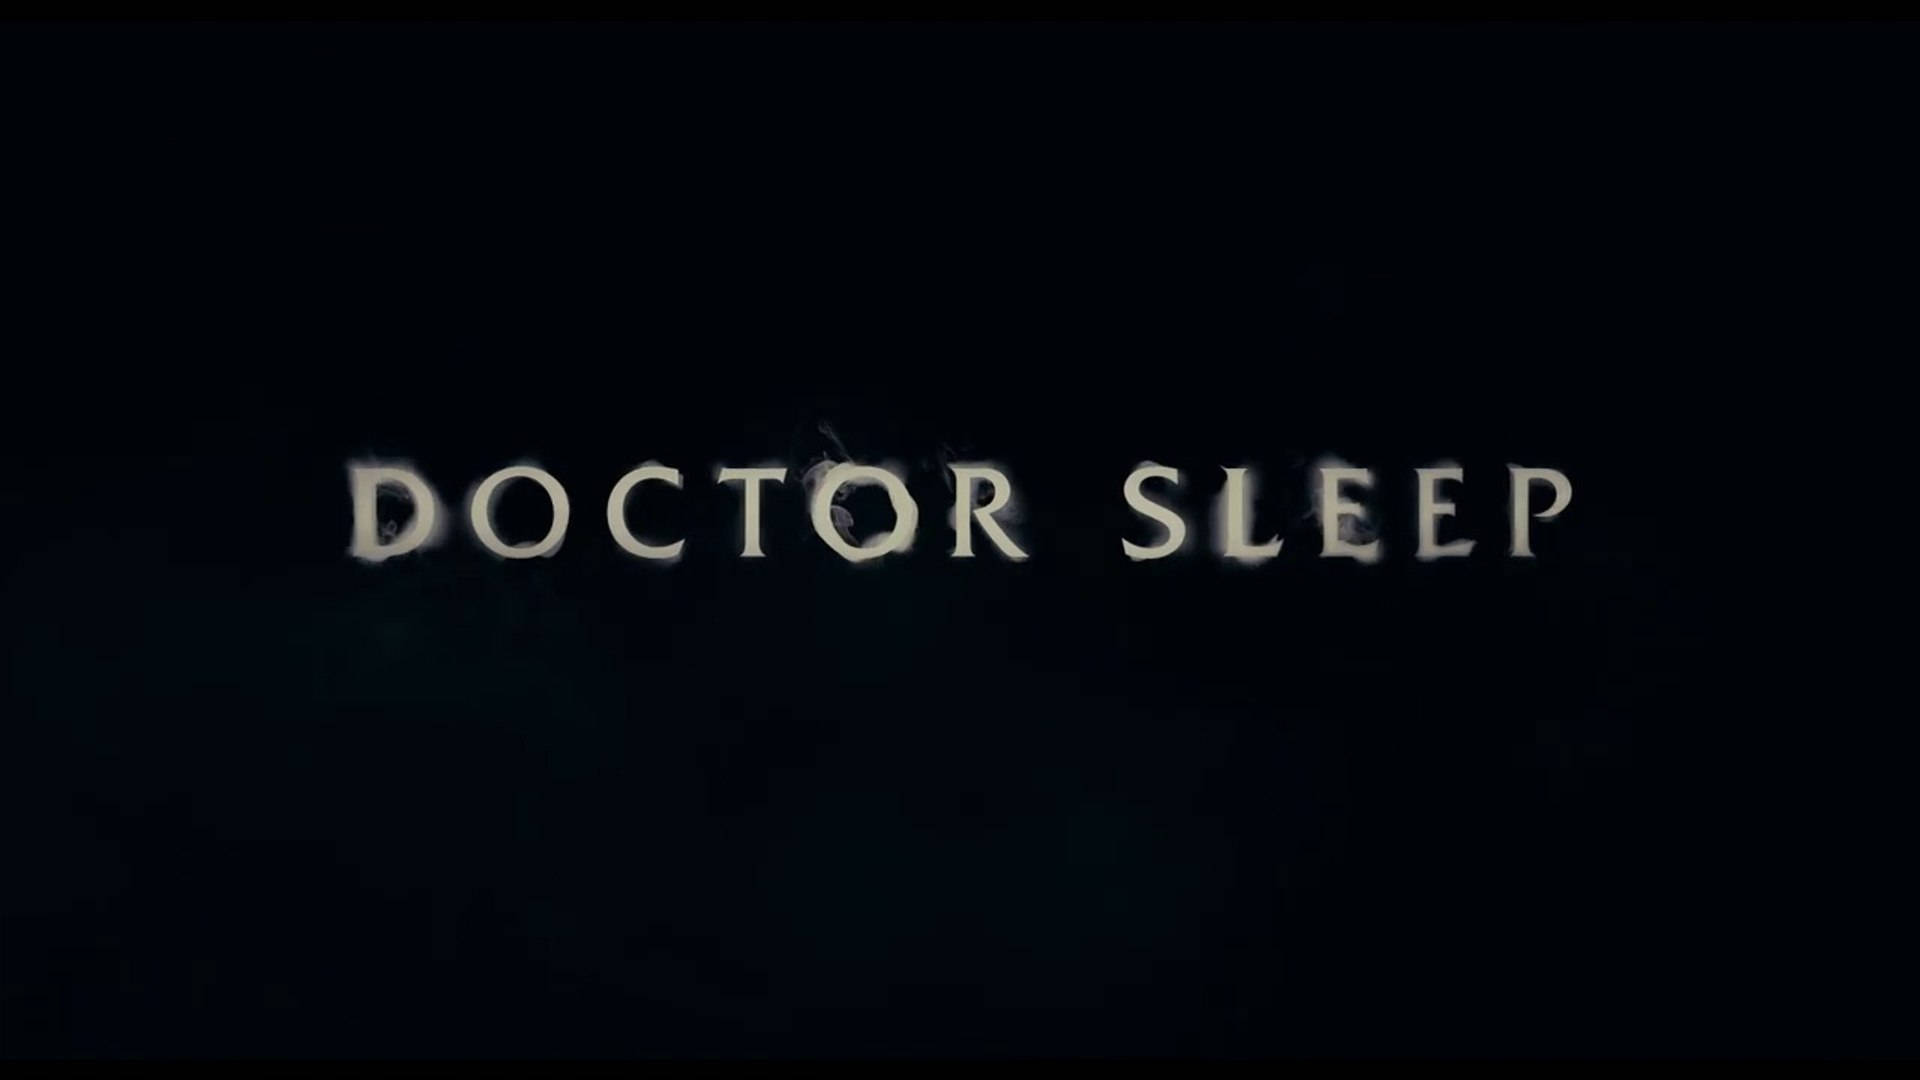 Minimalist Doctor Sleep Poster Wallpaper